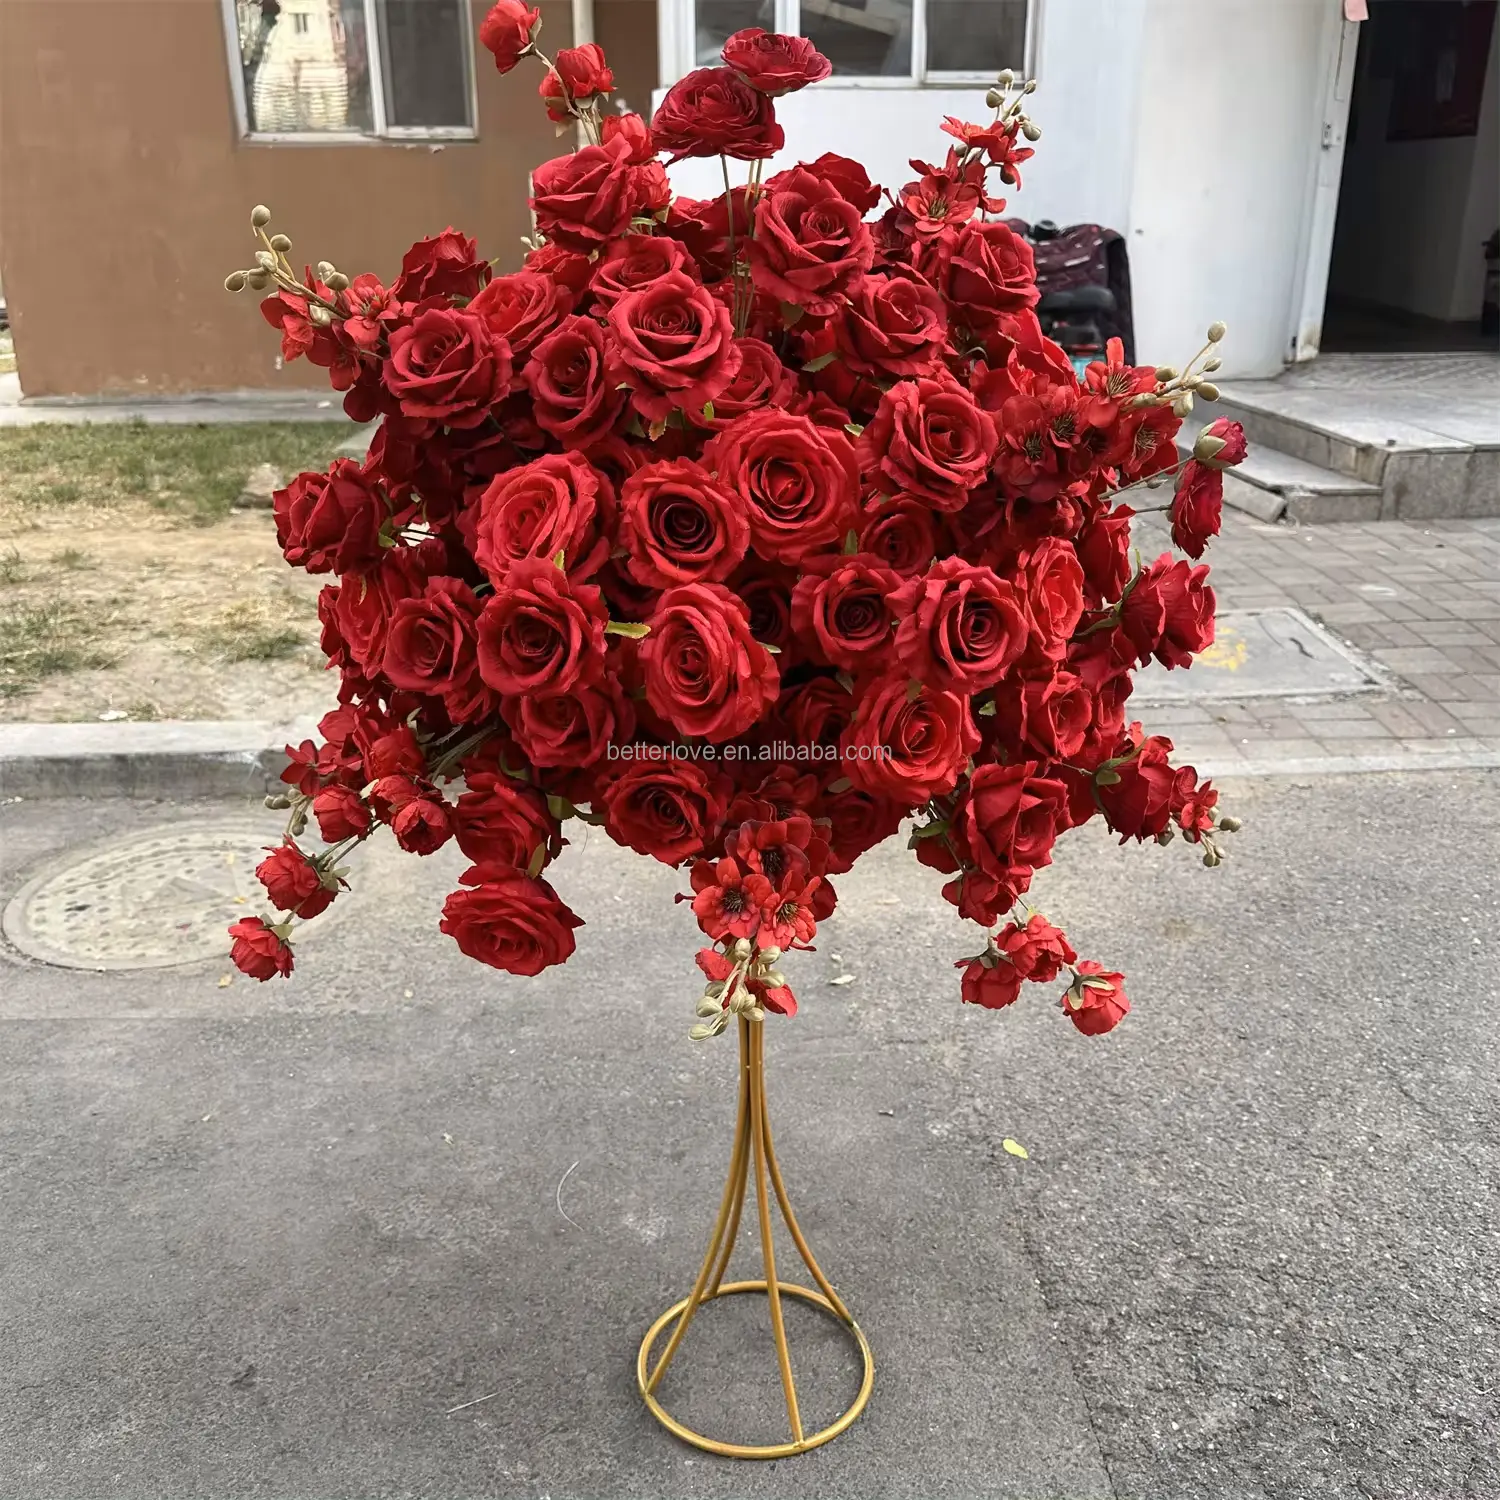 Betterlove Red Flower Balls Wedding Centerpieces Chrysanthemum Bouquet For Wedding Decoration Artificial Green